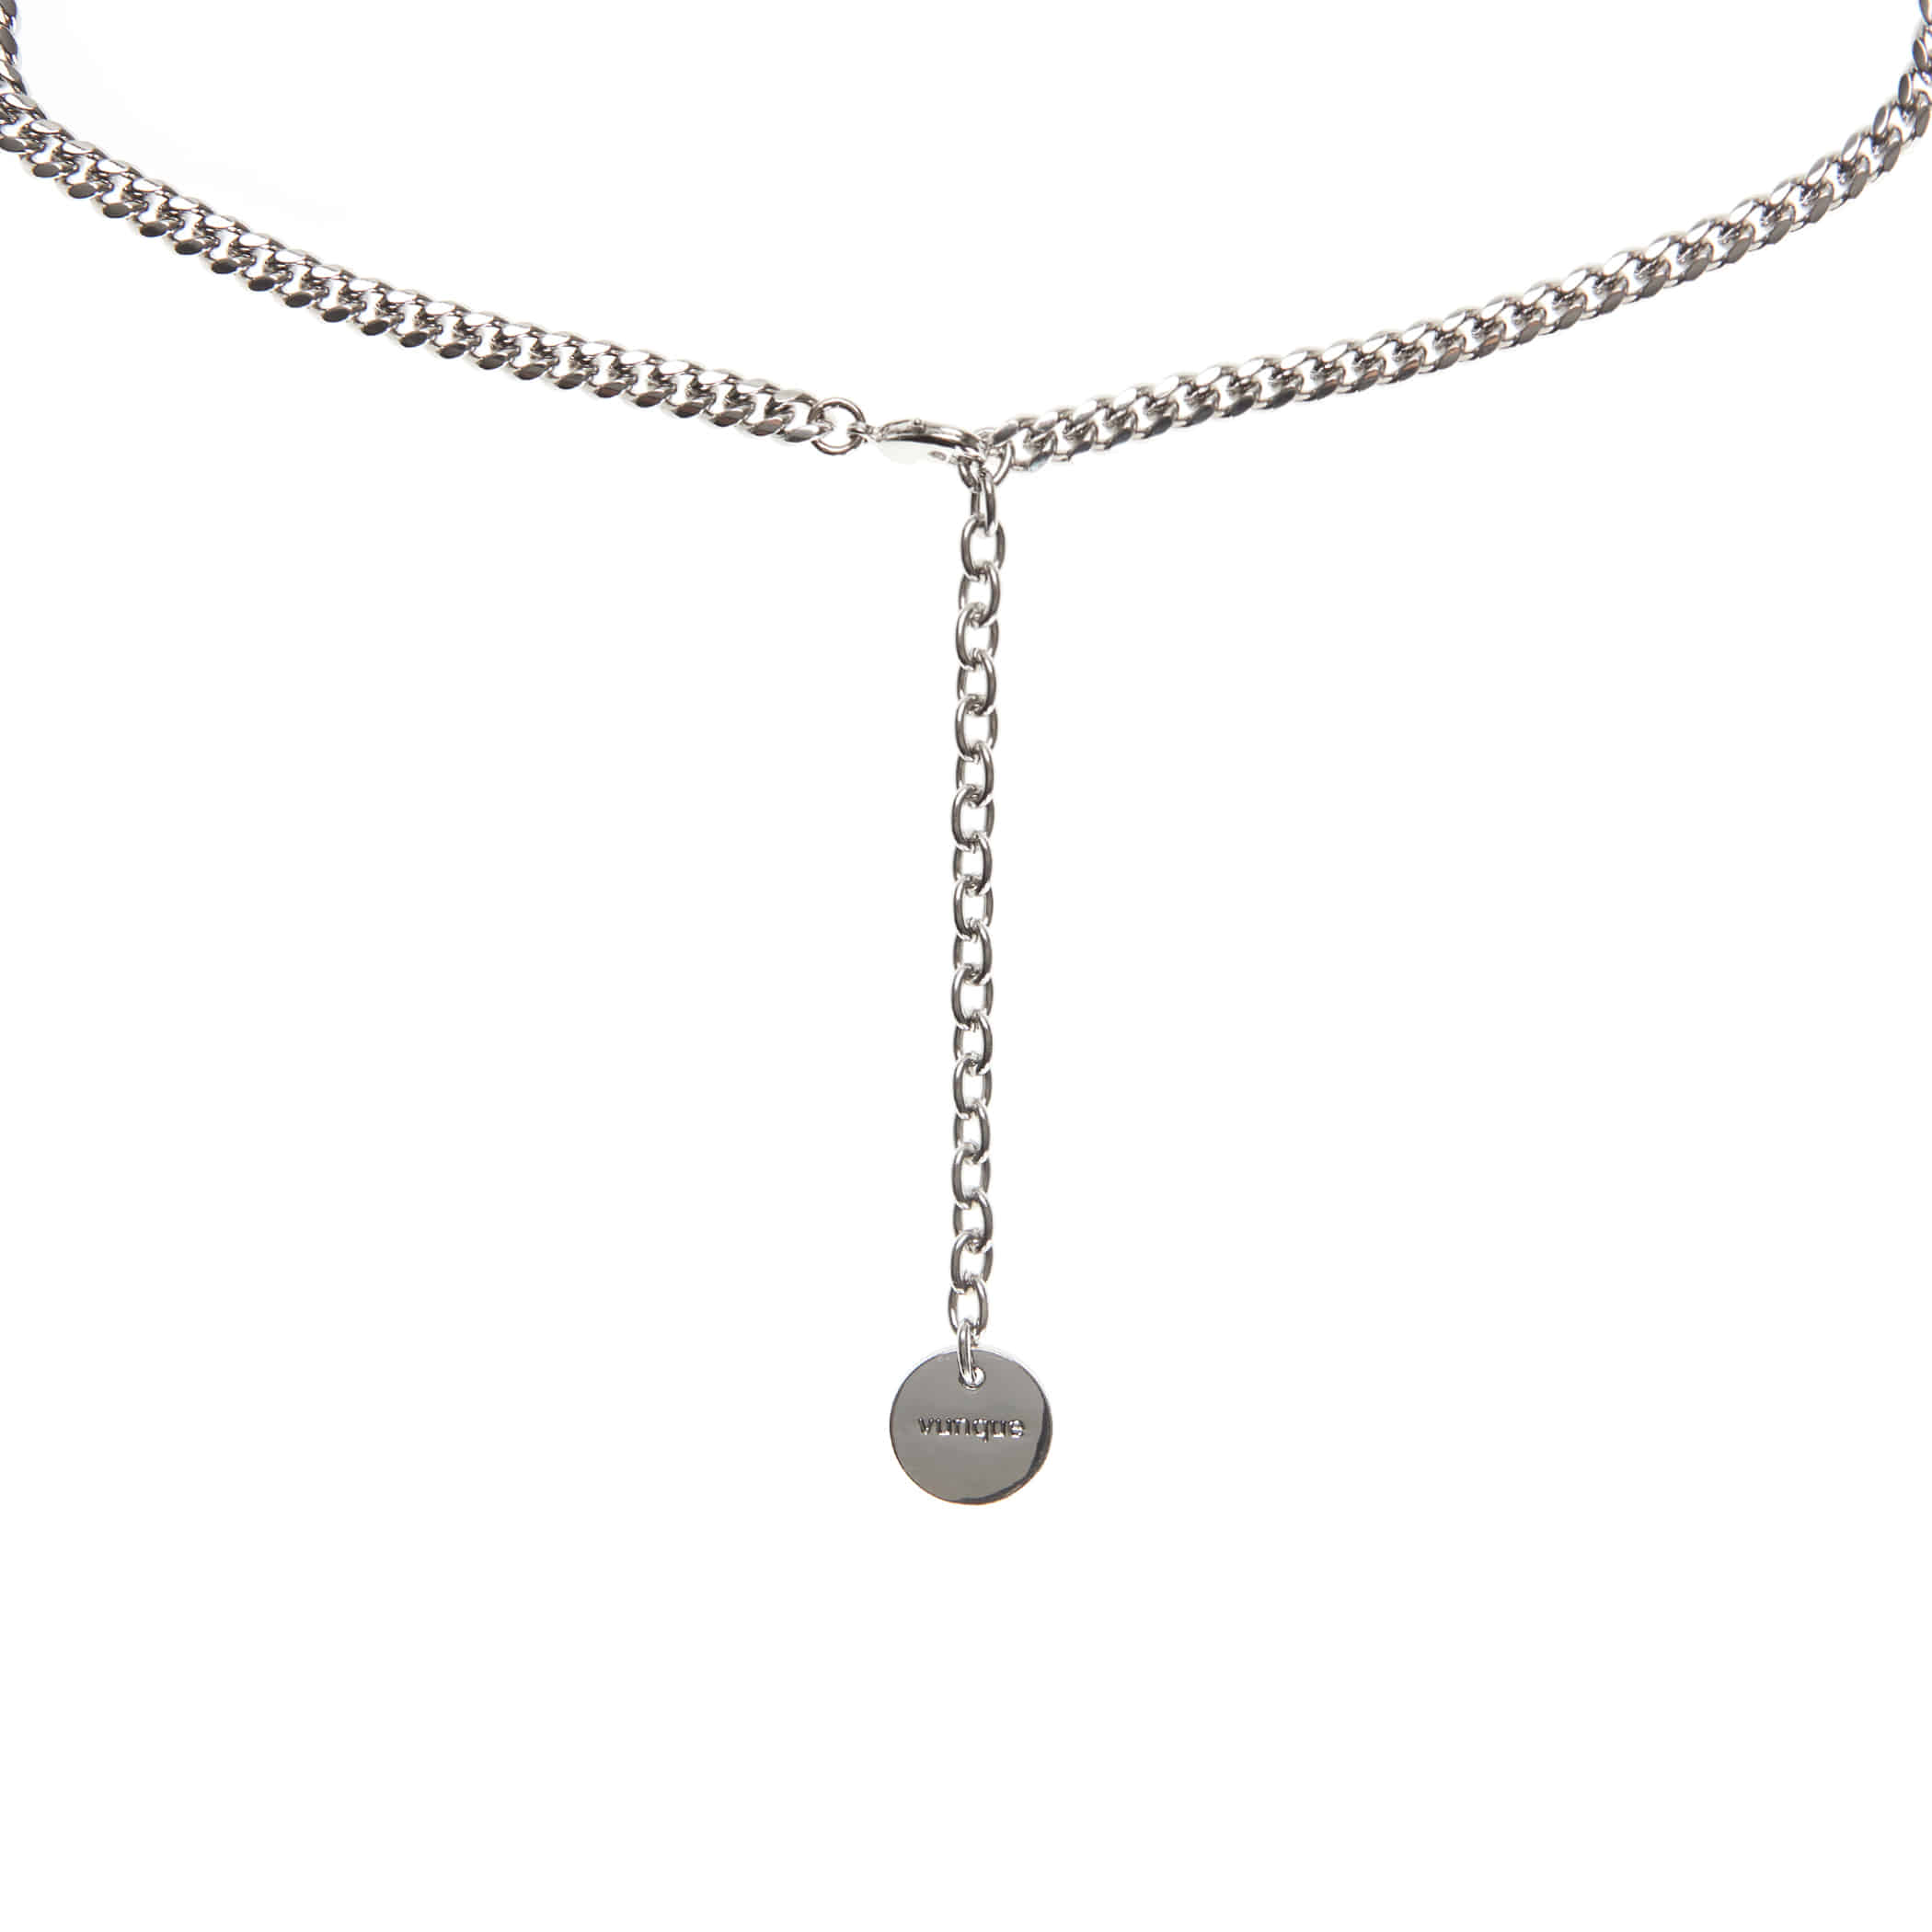 Mercury Chain Necklace (머큐리 체인 넥클레스) Silver